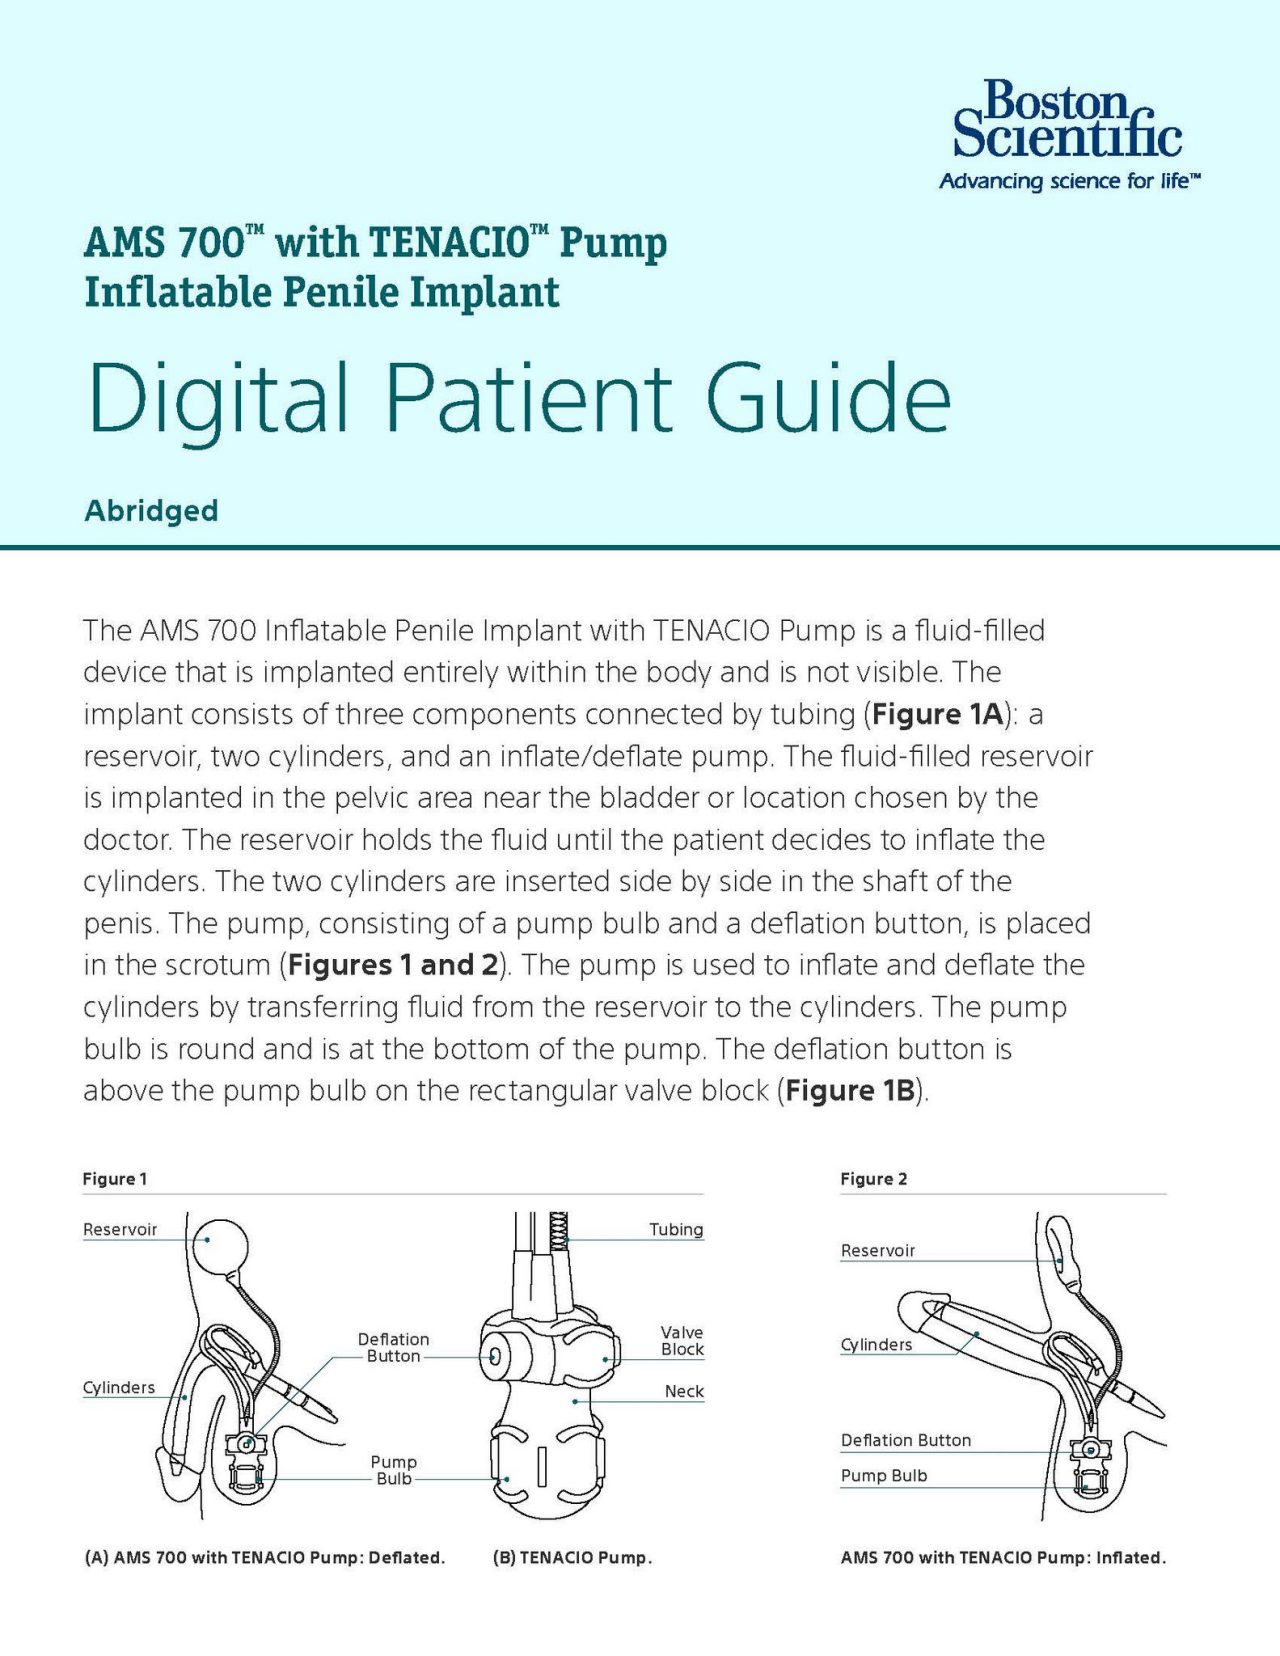 picture depicting tenacio pump diagrams and some text